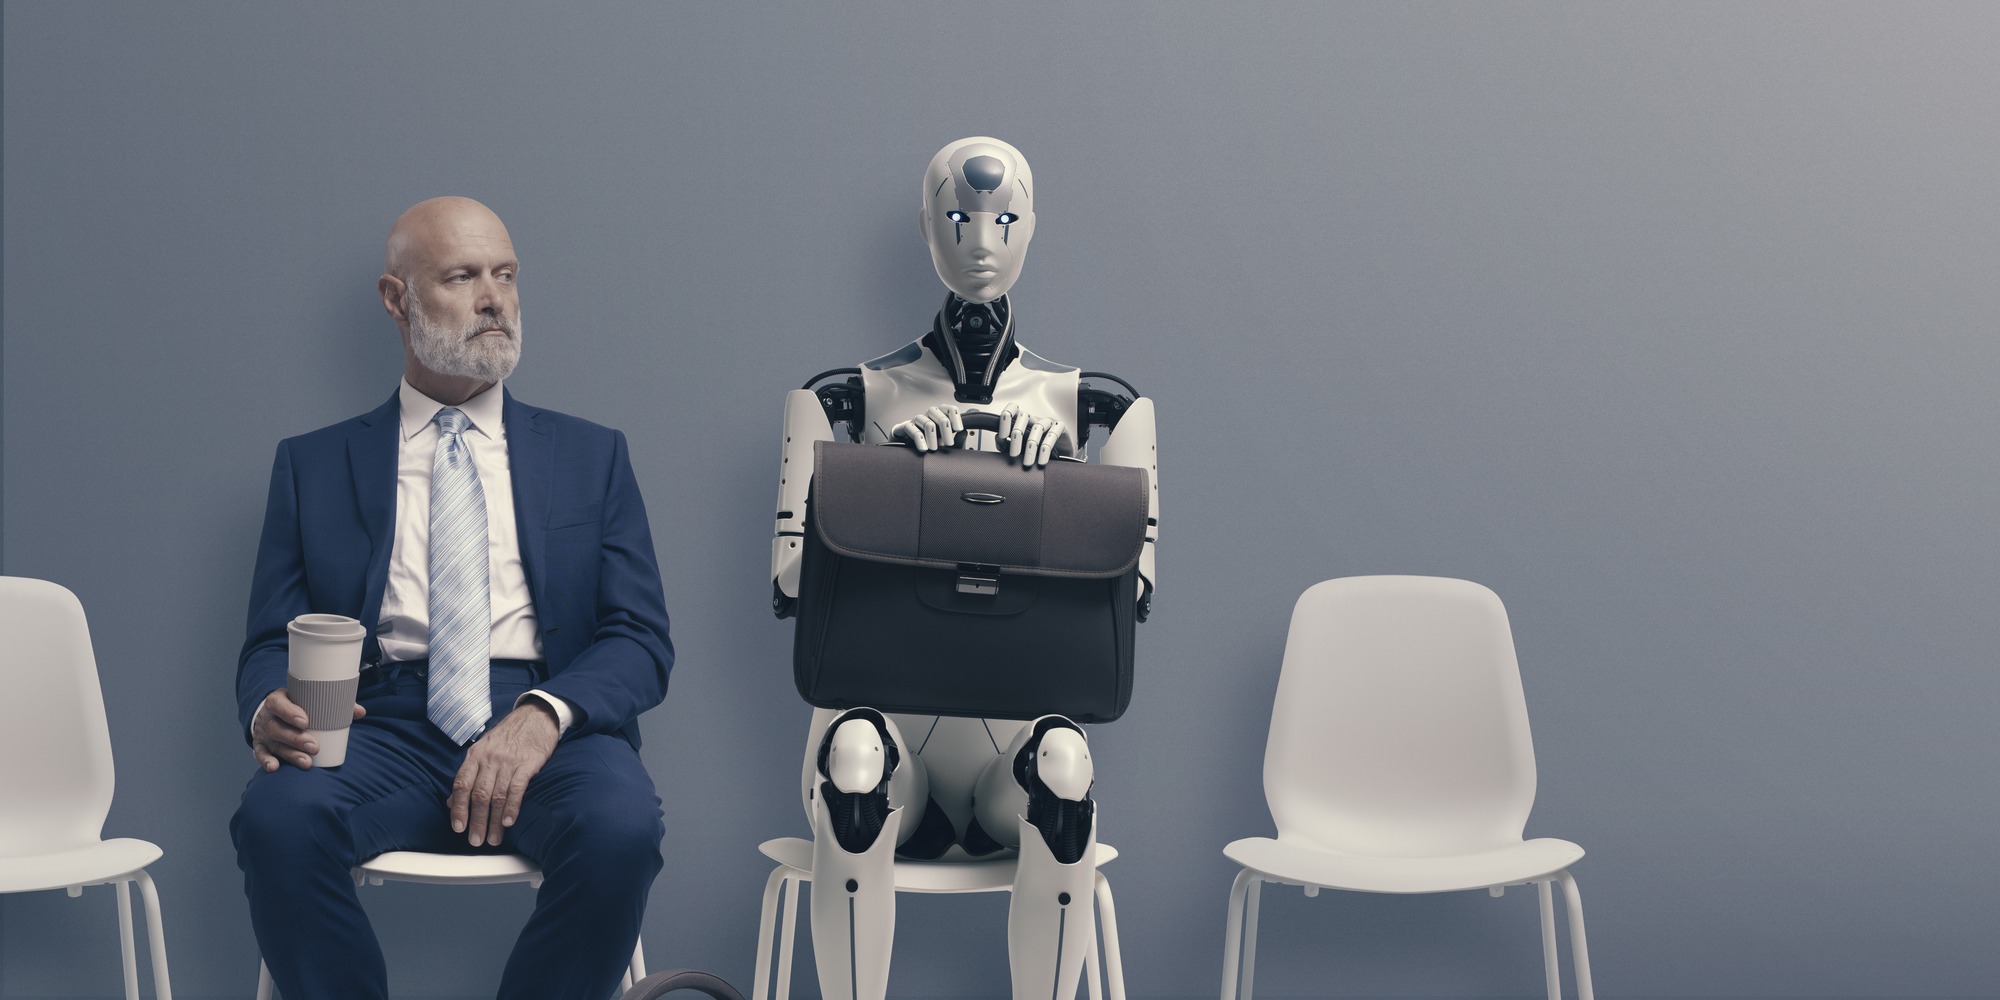 An AI and a marketer sat at a job interview